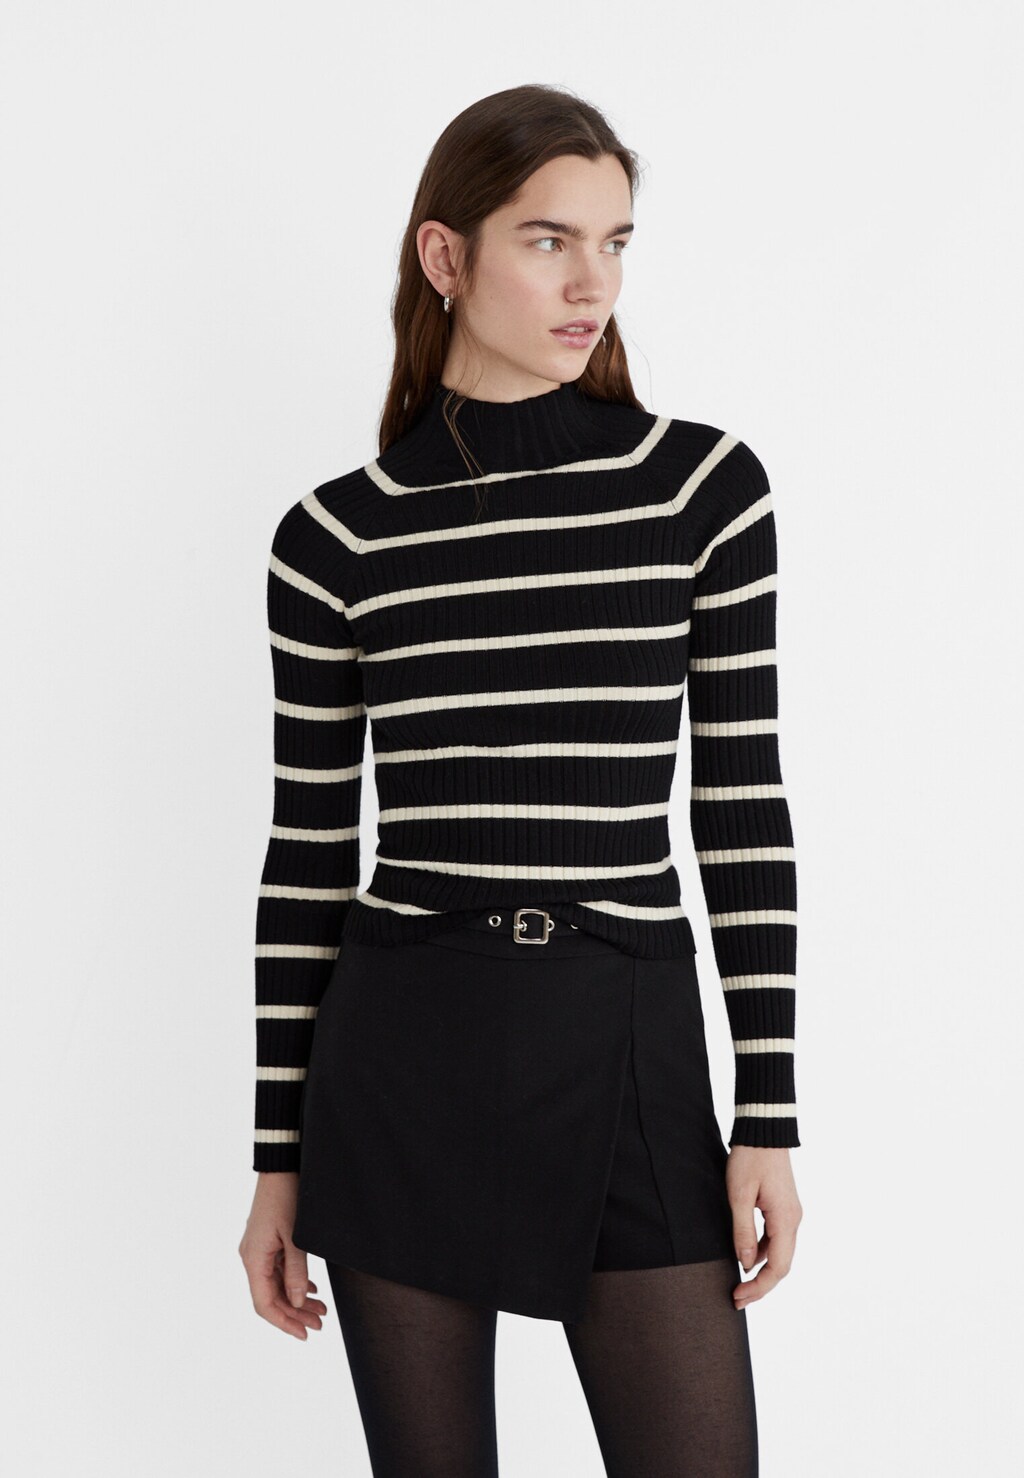 Ribbed striped mock turtleneck knit jumper - Women's fashion